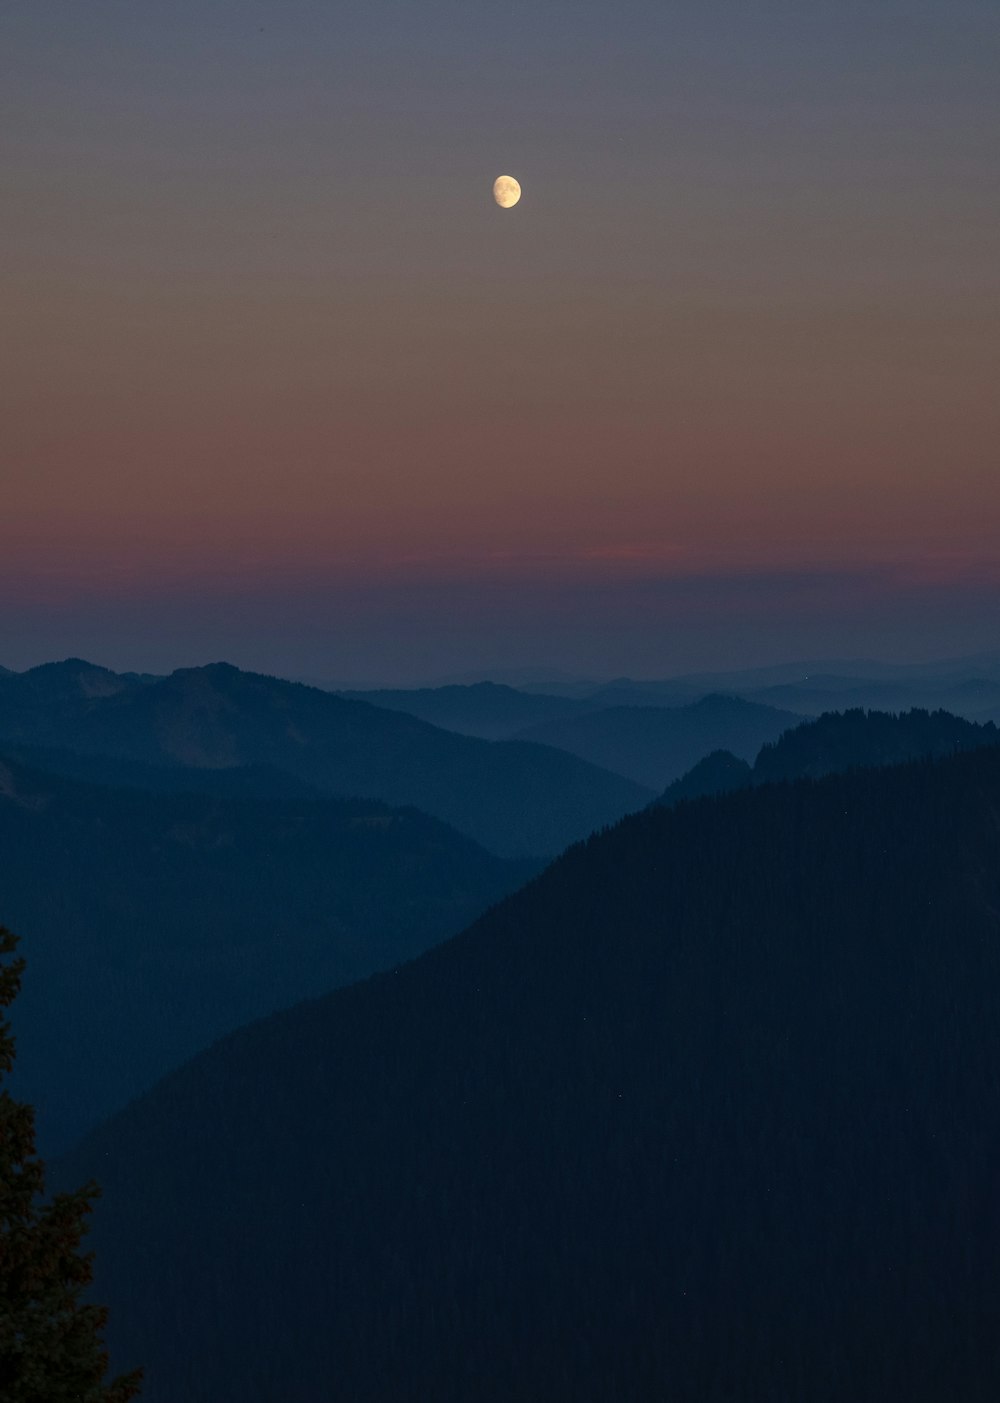 Se ve una luna llena sobre una cadena montañosa